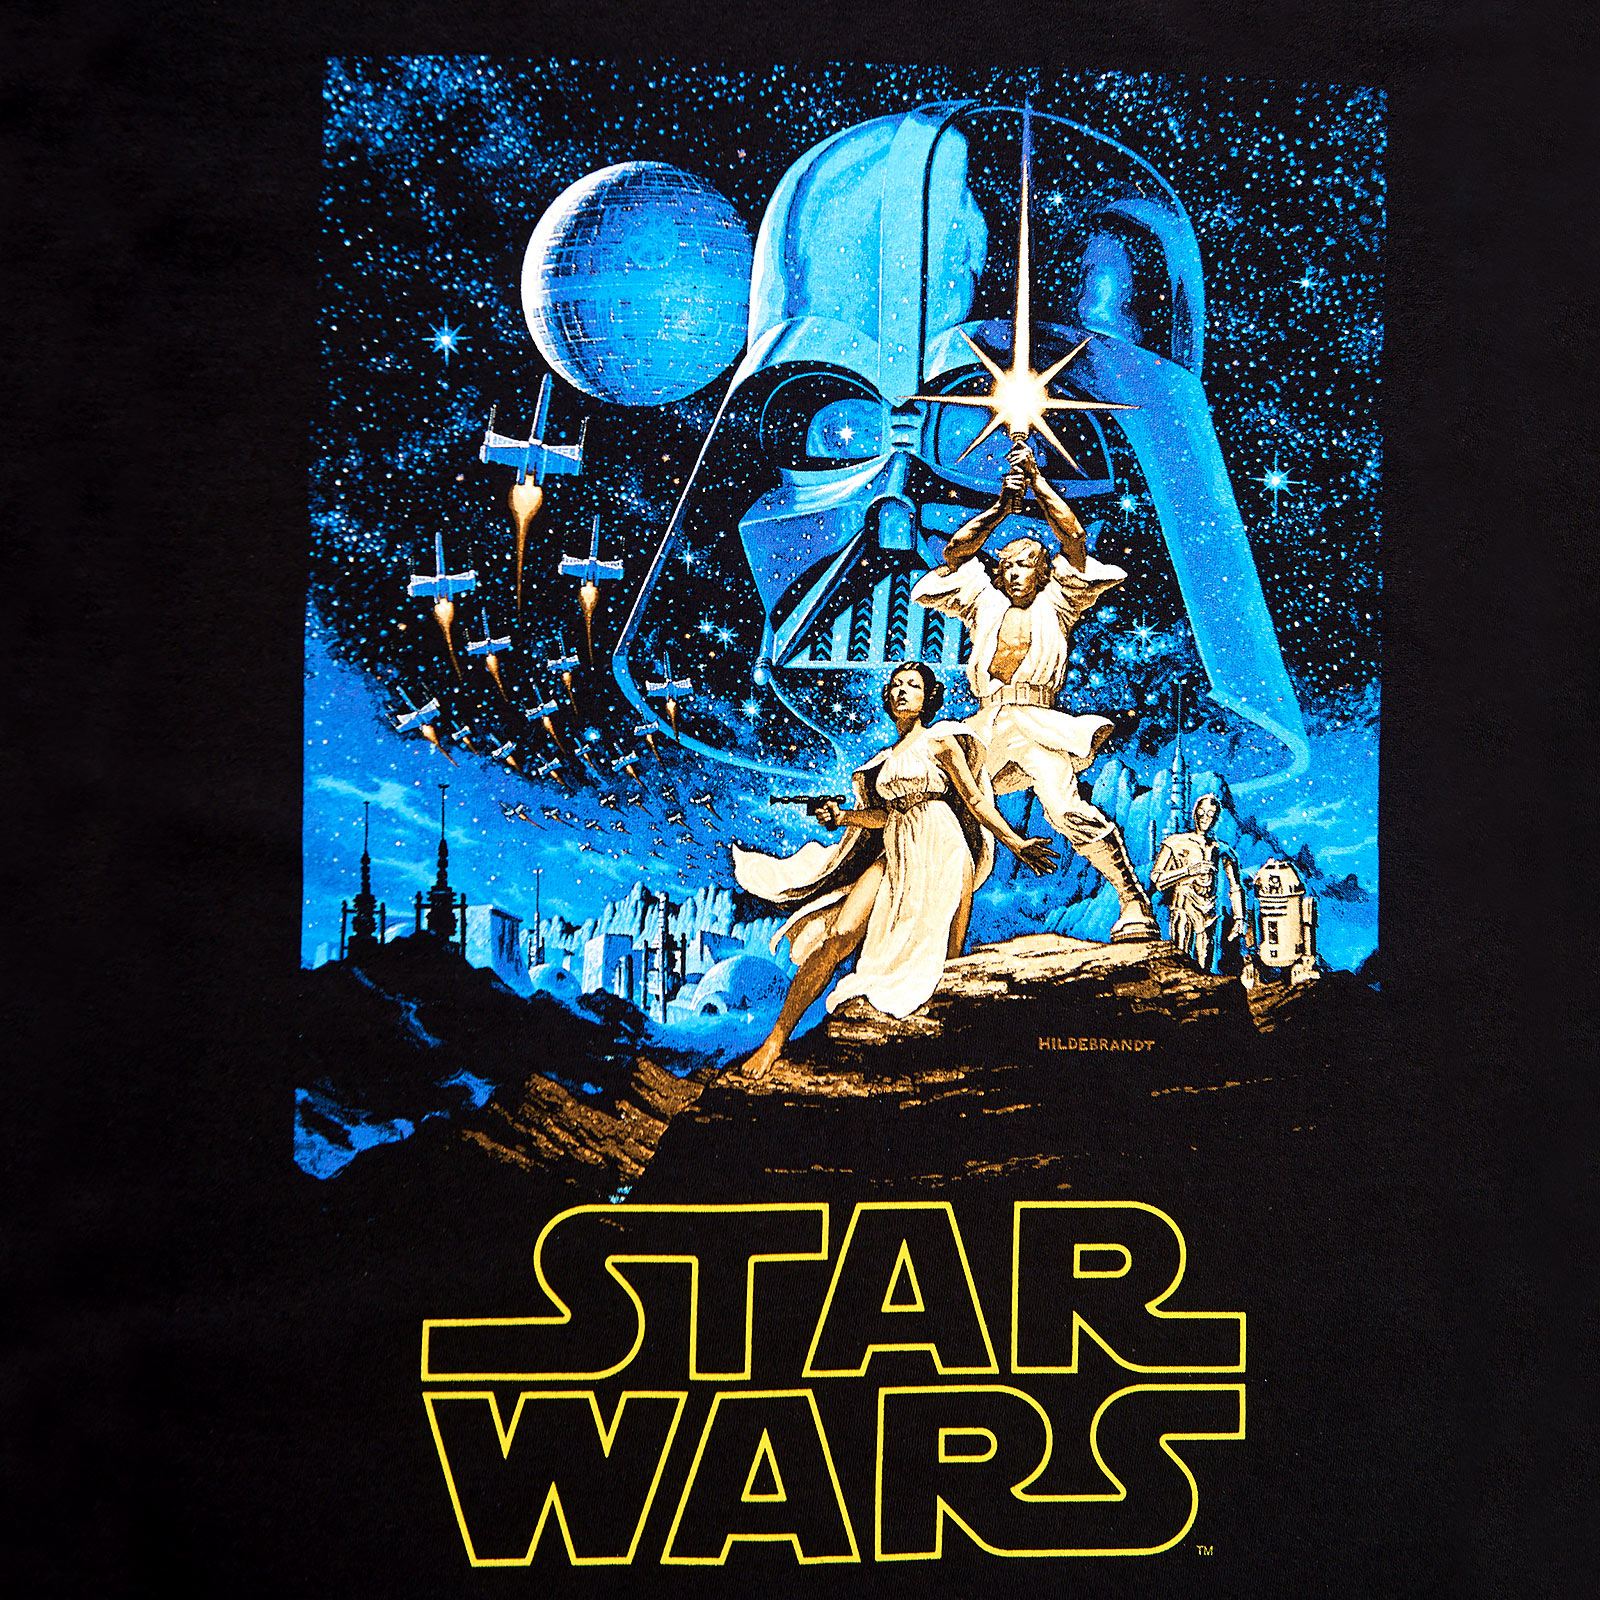 Star Wars - A New Hope Classic T-Shirt schwarz